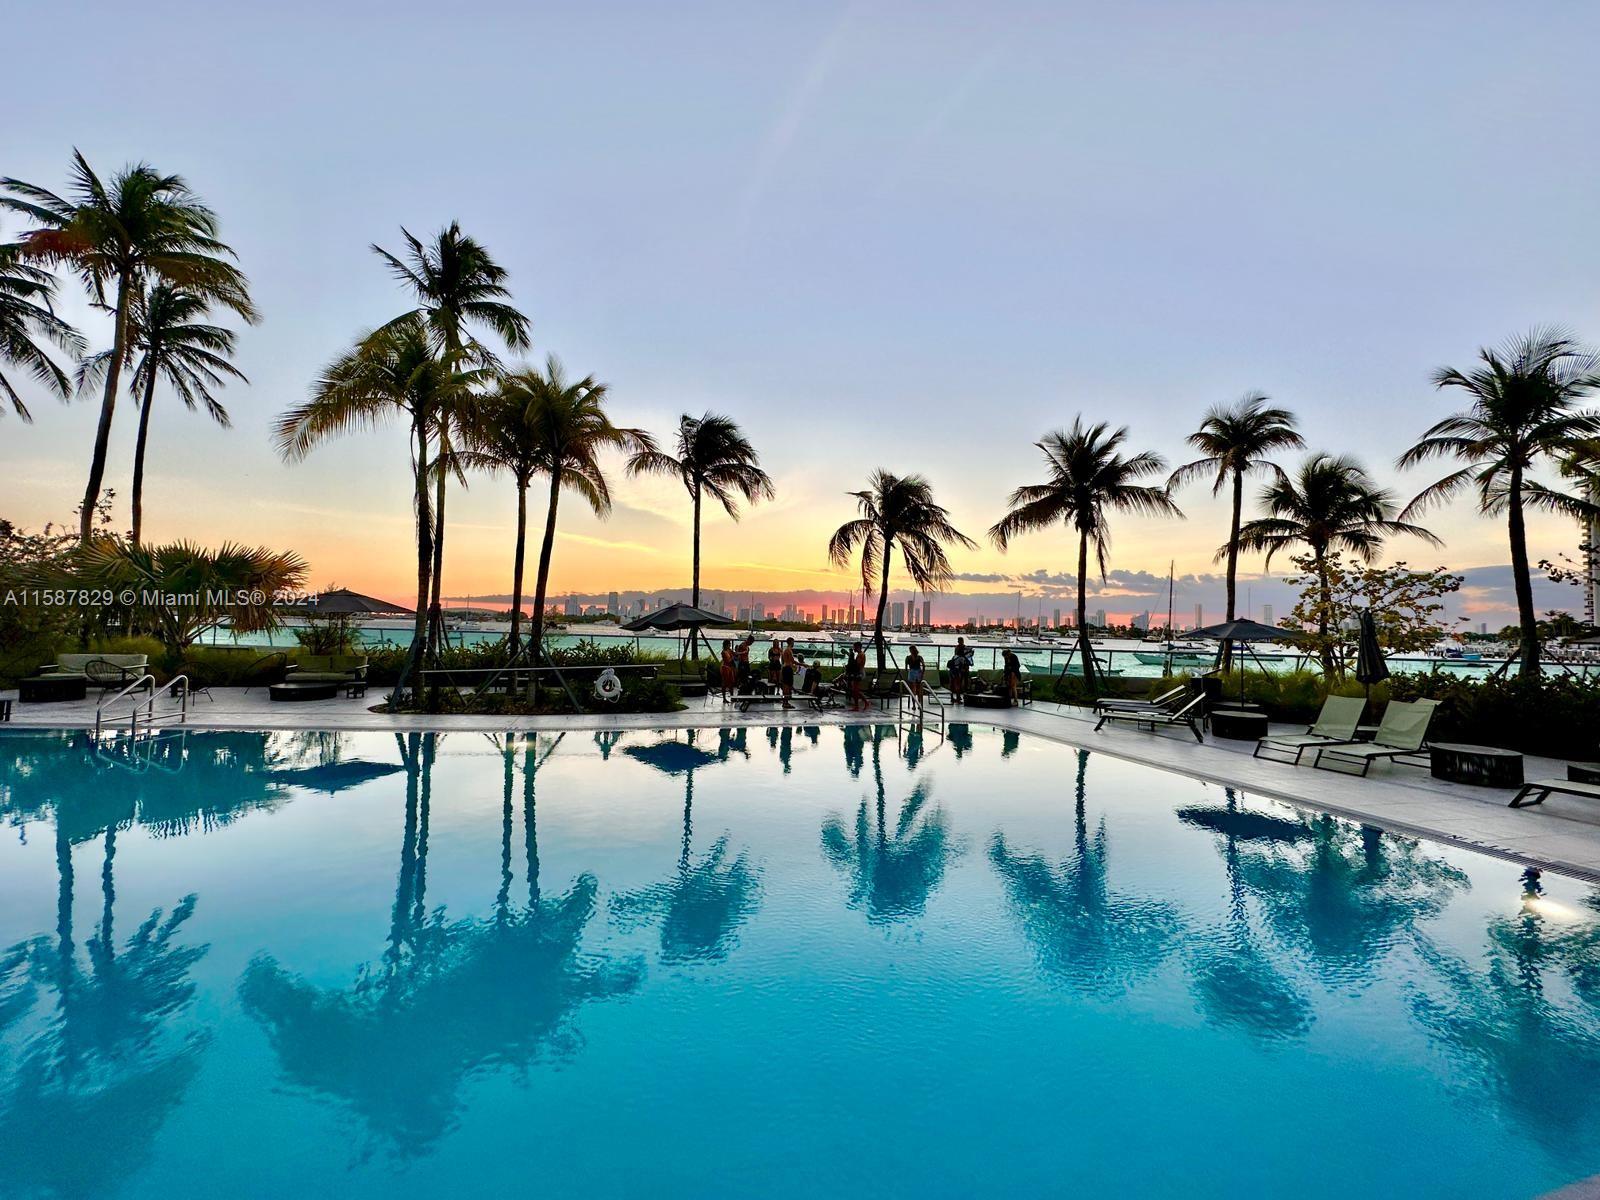 Property for Sale at 1500 Bay Rd 502S, Miami Beach, Miami-Dade County, Florida - Bedrooms: 1 
Bathrooms: 1  - $400,000